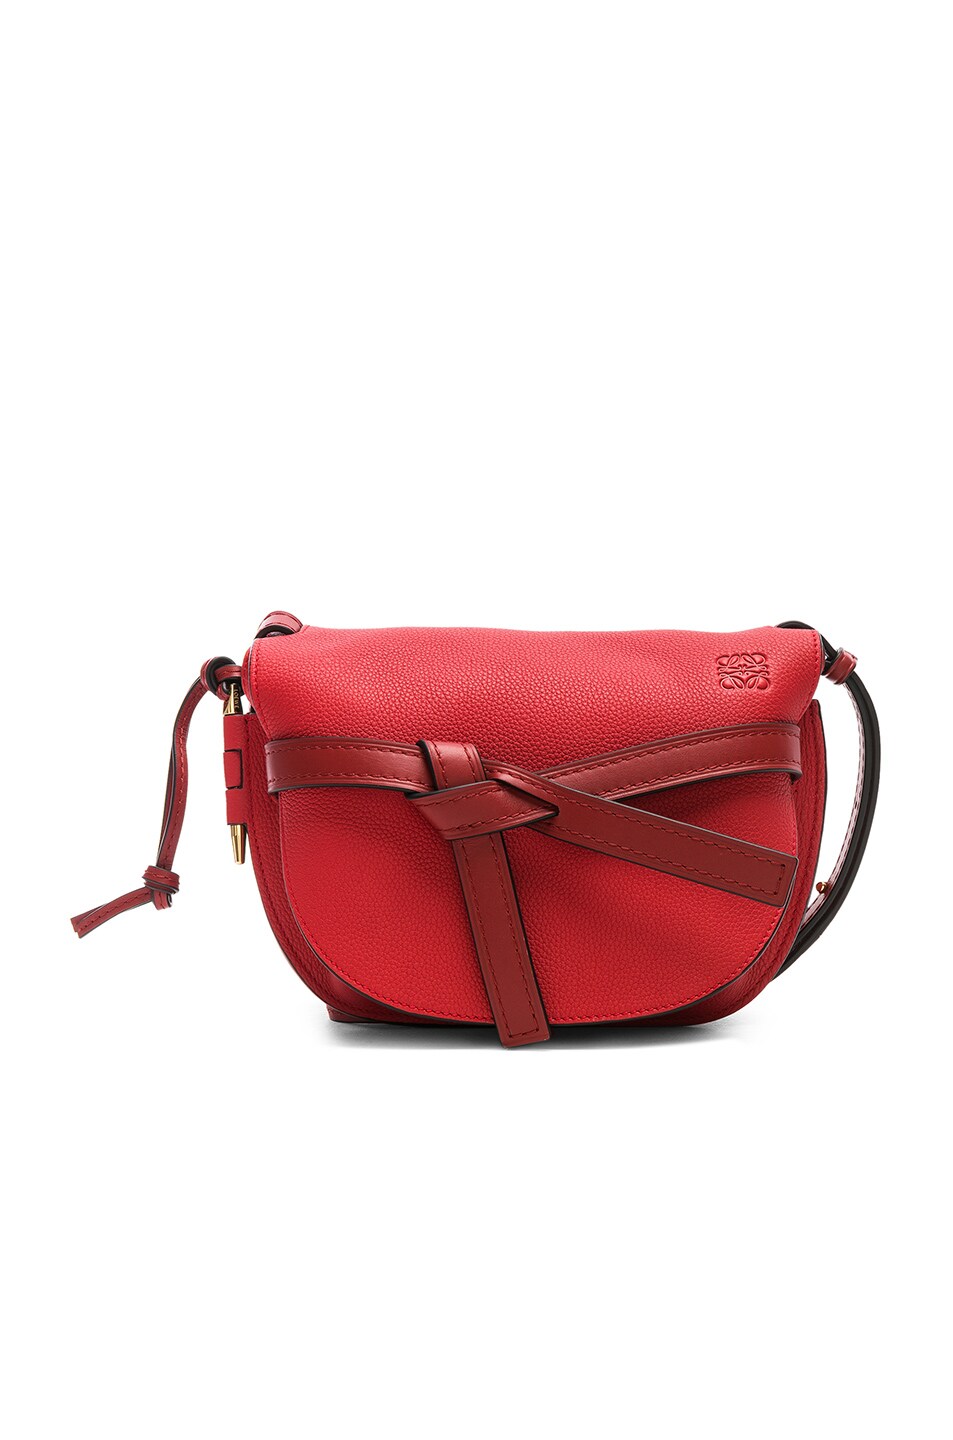 Image 1 of Loewe Gate Small Bag in Scarlet Red & Burnt Red